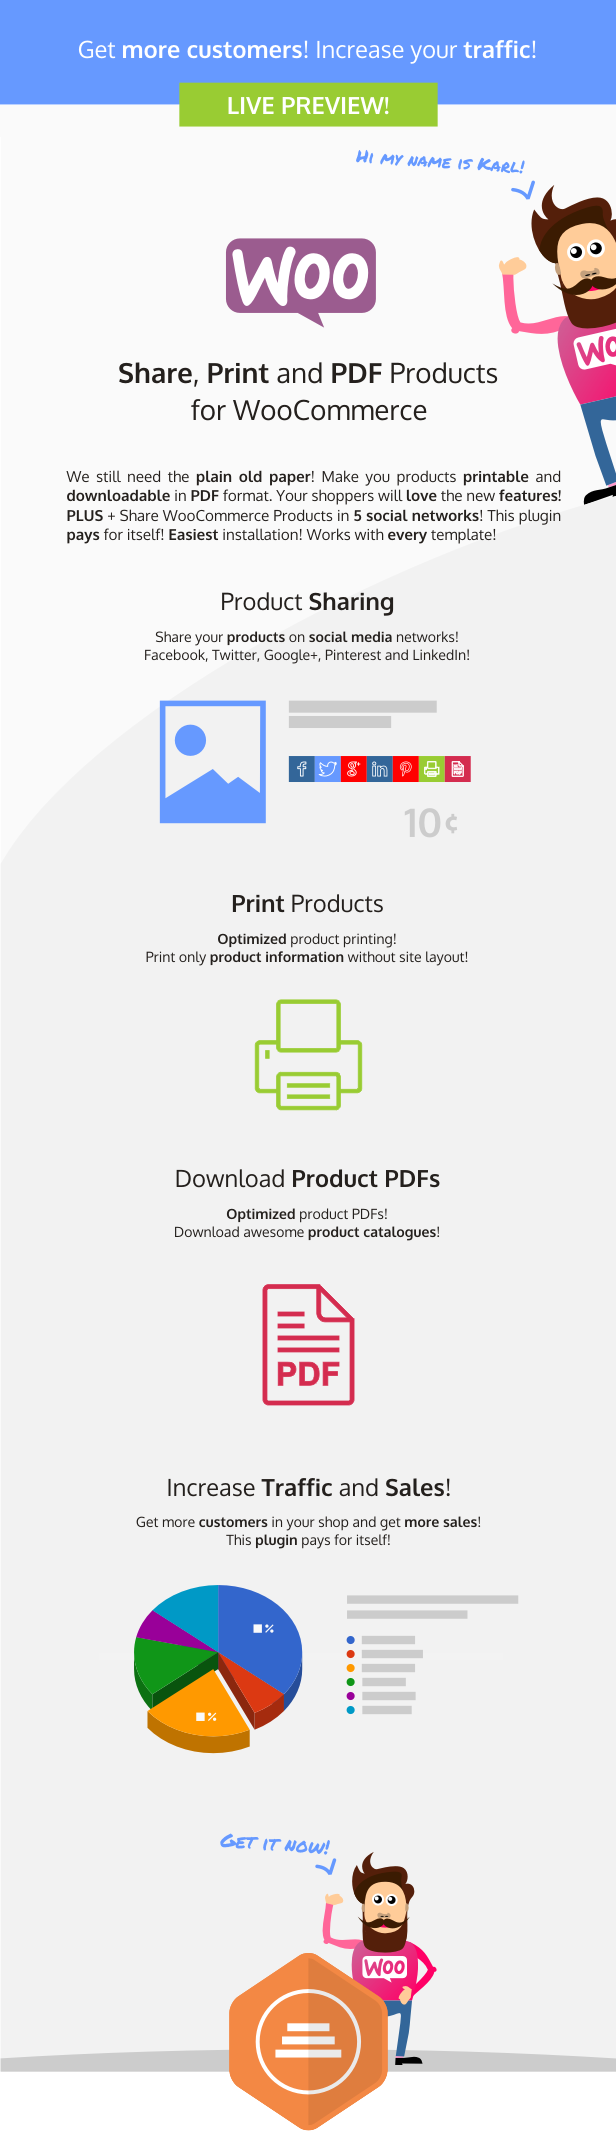 Productos para compartir, imprimir y PDF para WooCommerce - 2